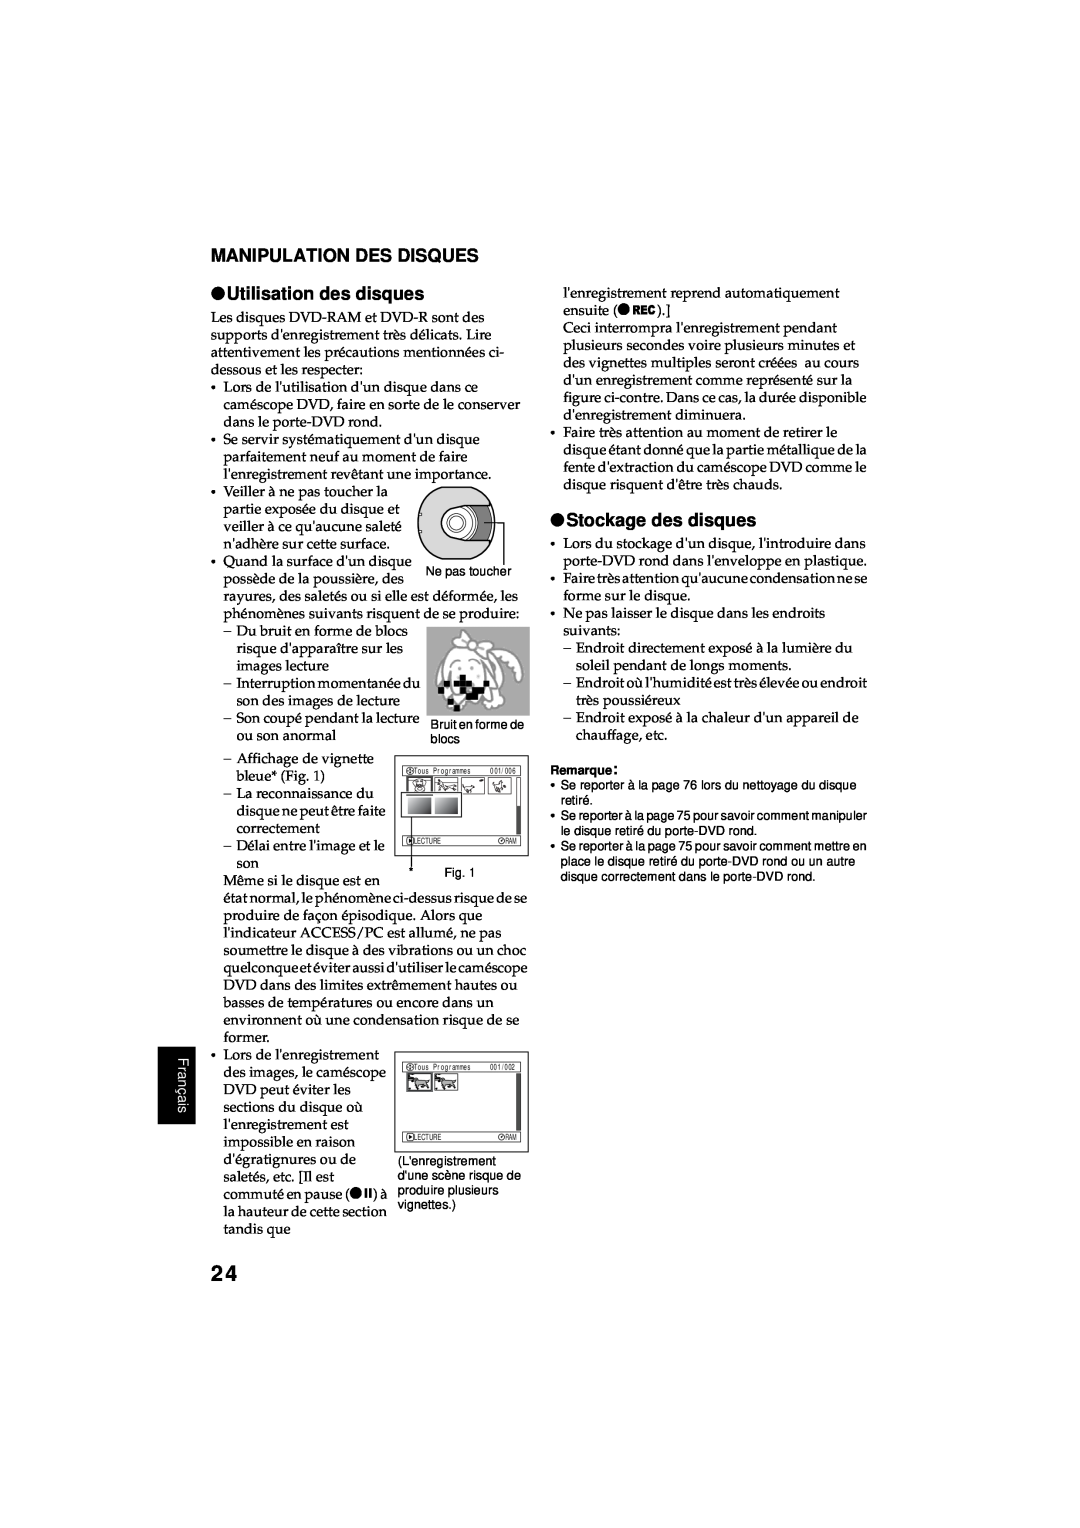 Hitachi DZ-MV380A manual MANIPULATION DES DISQUES Utilisation des disques, Stockage des disques, Français 